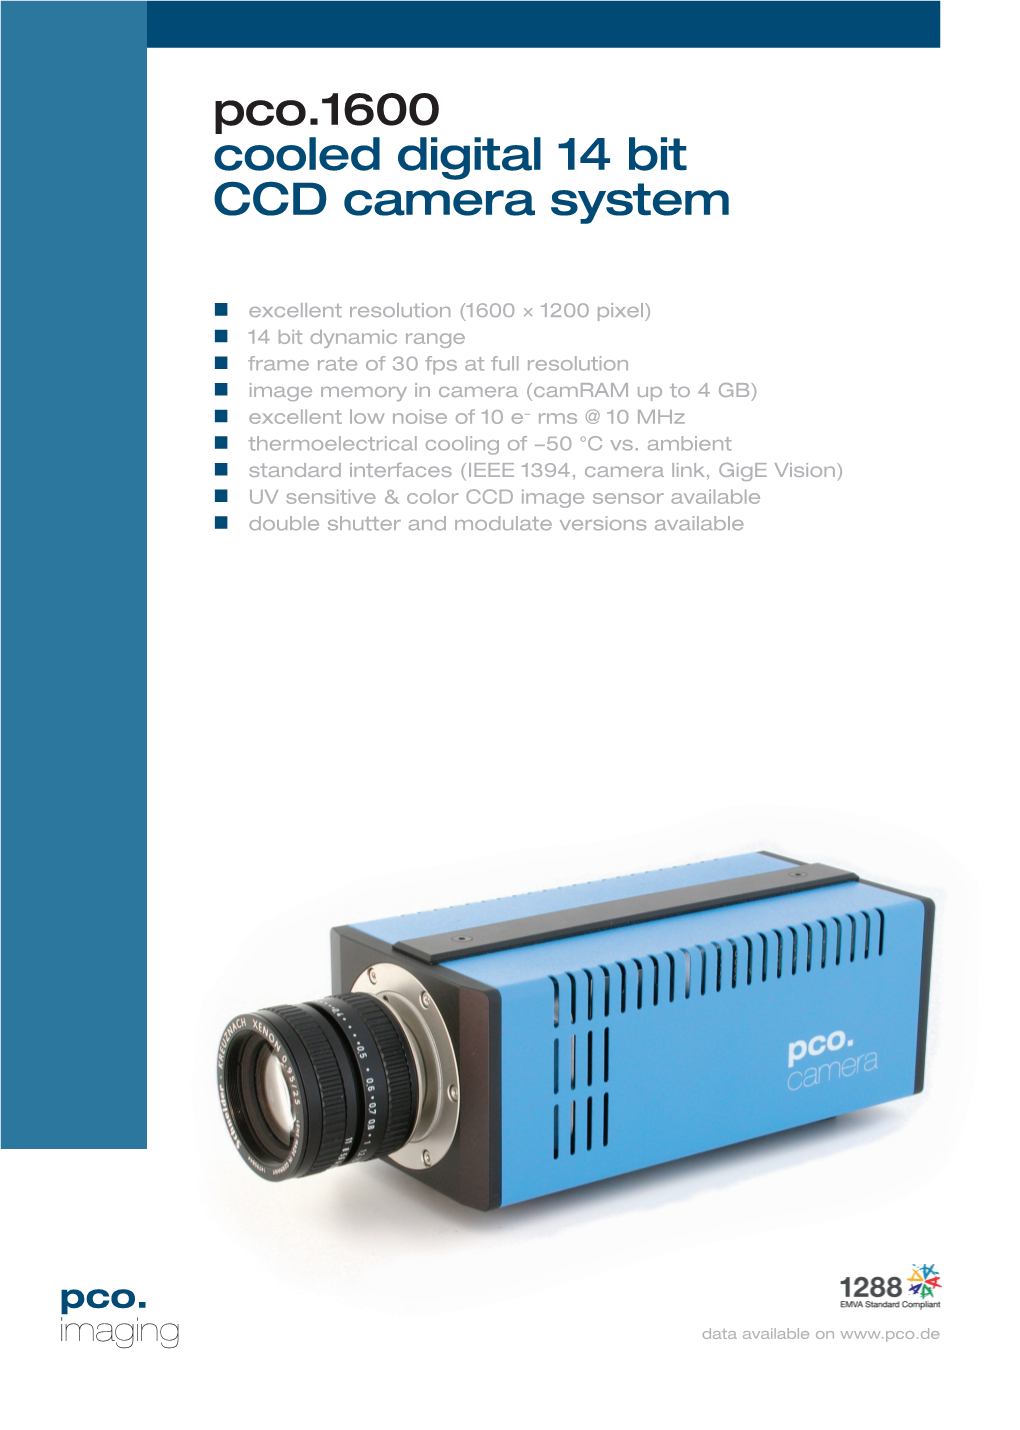 Pco.1600 Cooled Digital 14 Bit CCD Camera System